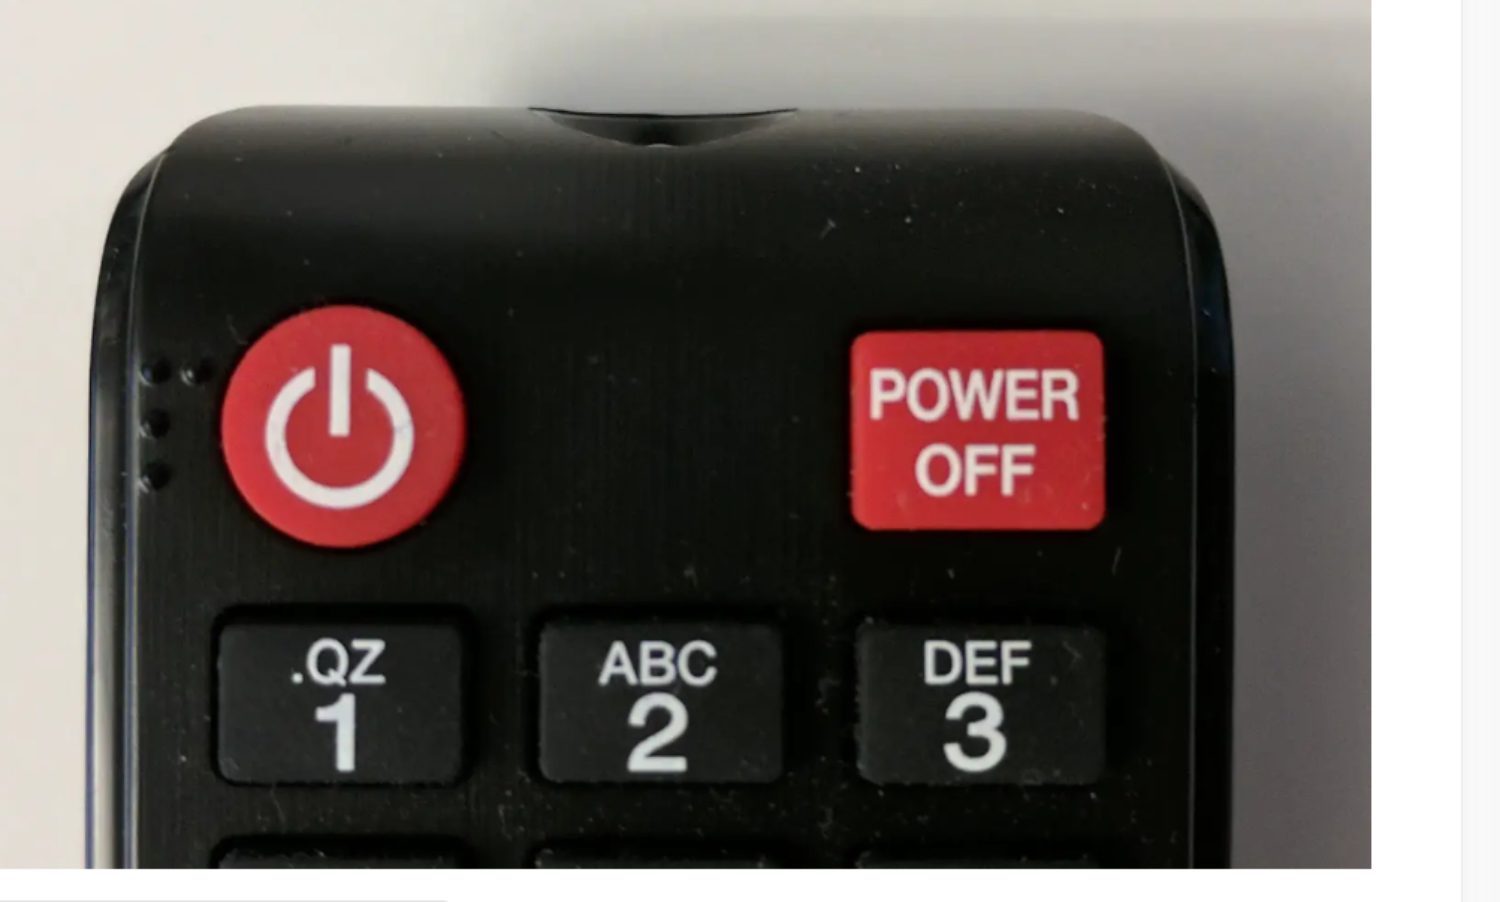 press power button